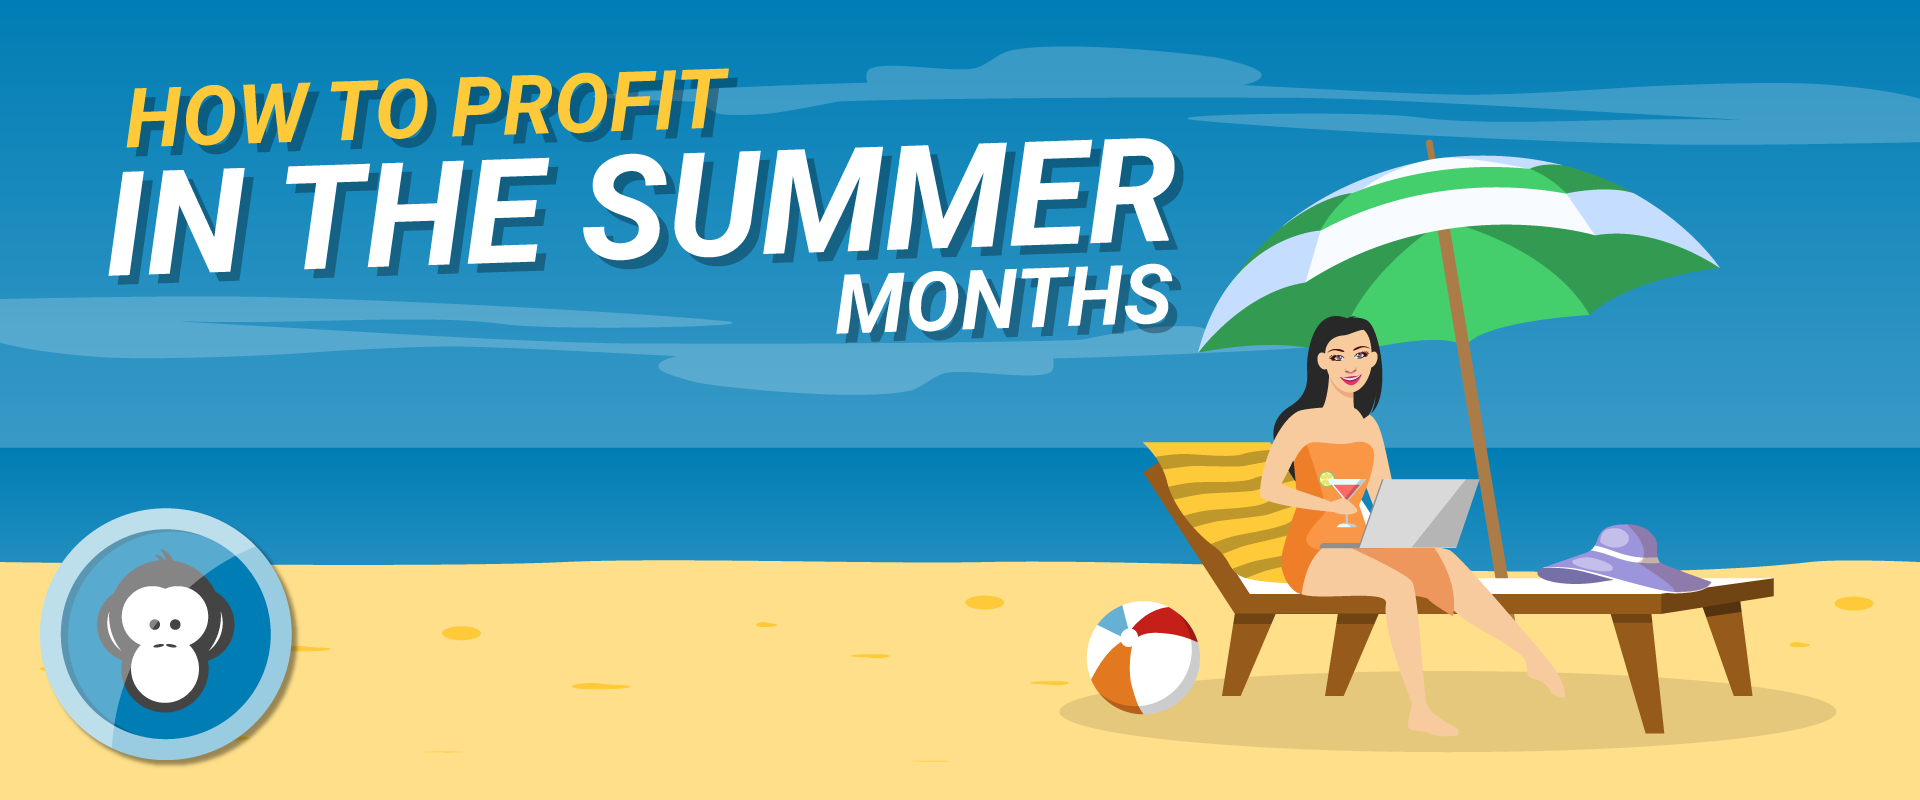 Summer-months-profit-1.1